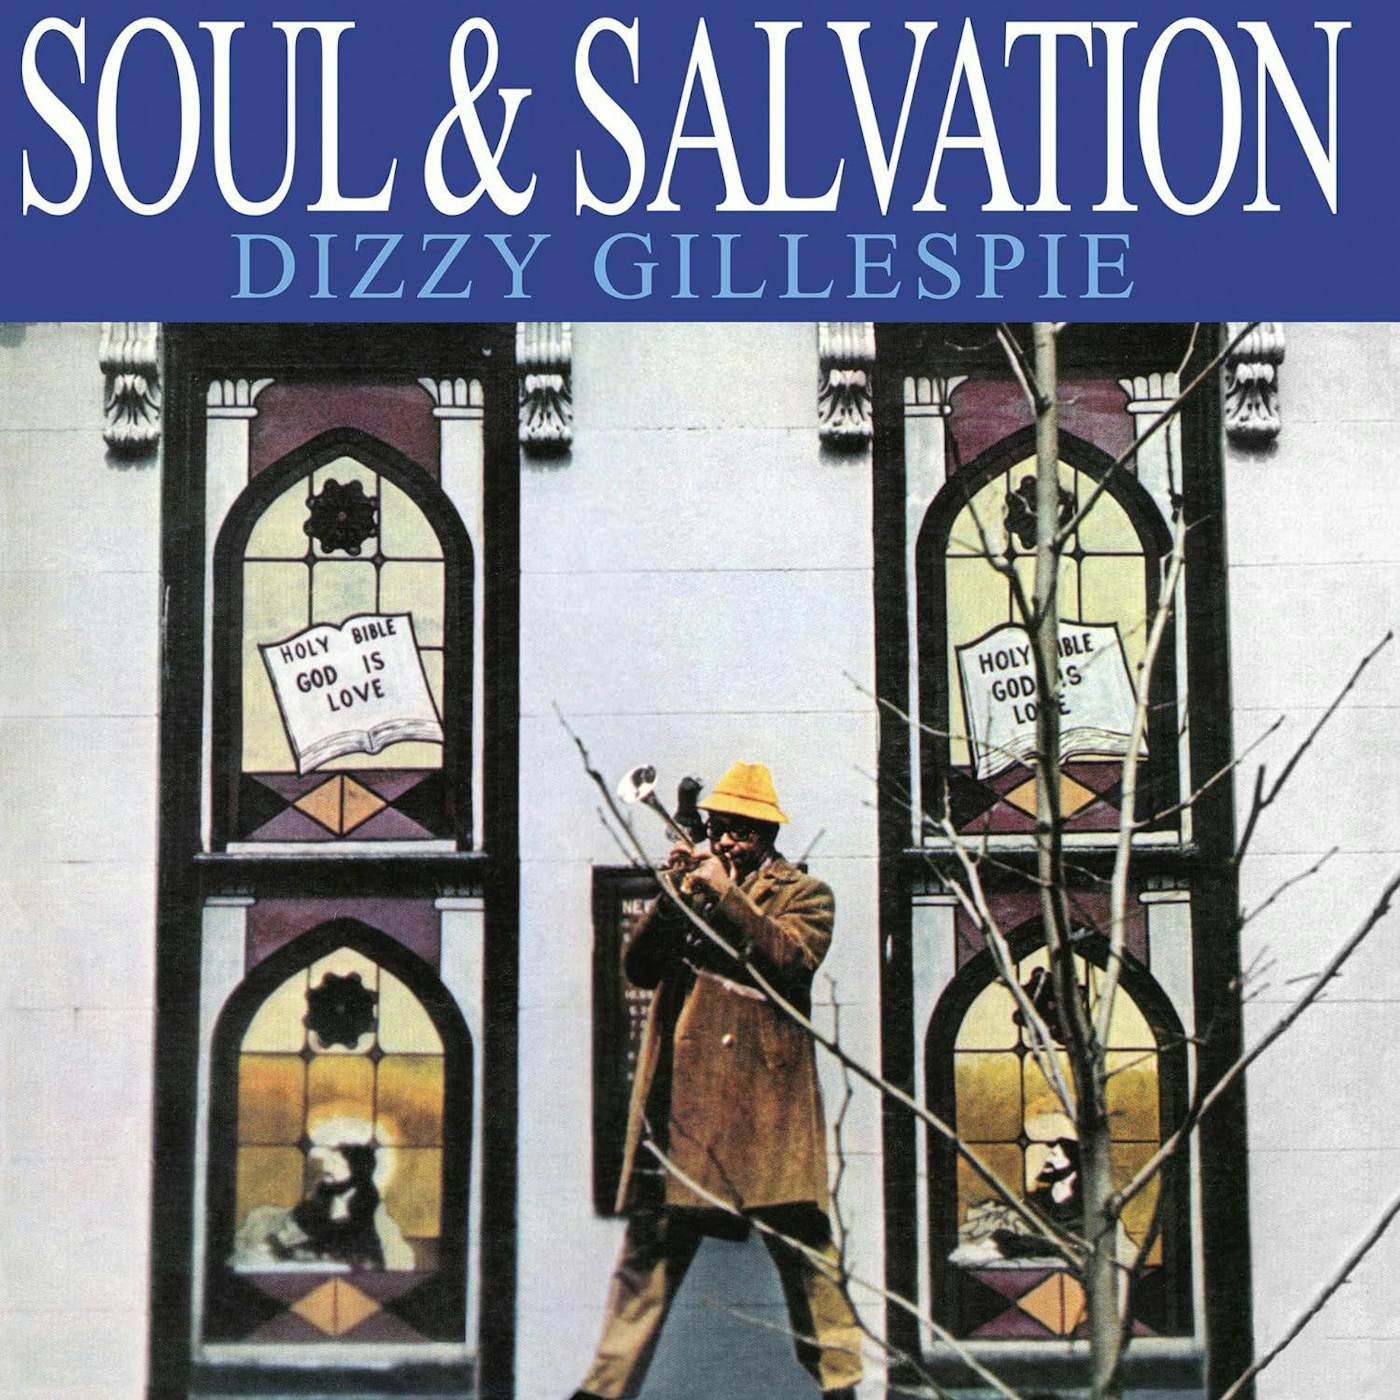 Dizzy Gillespie Soul & Salvation (180 grams) Vinyl Record